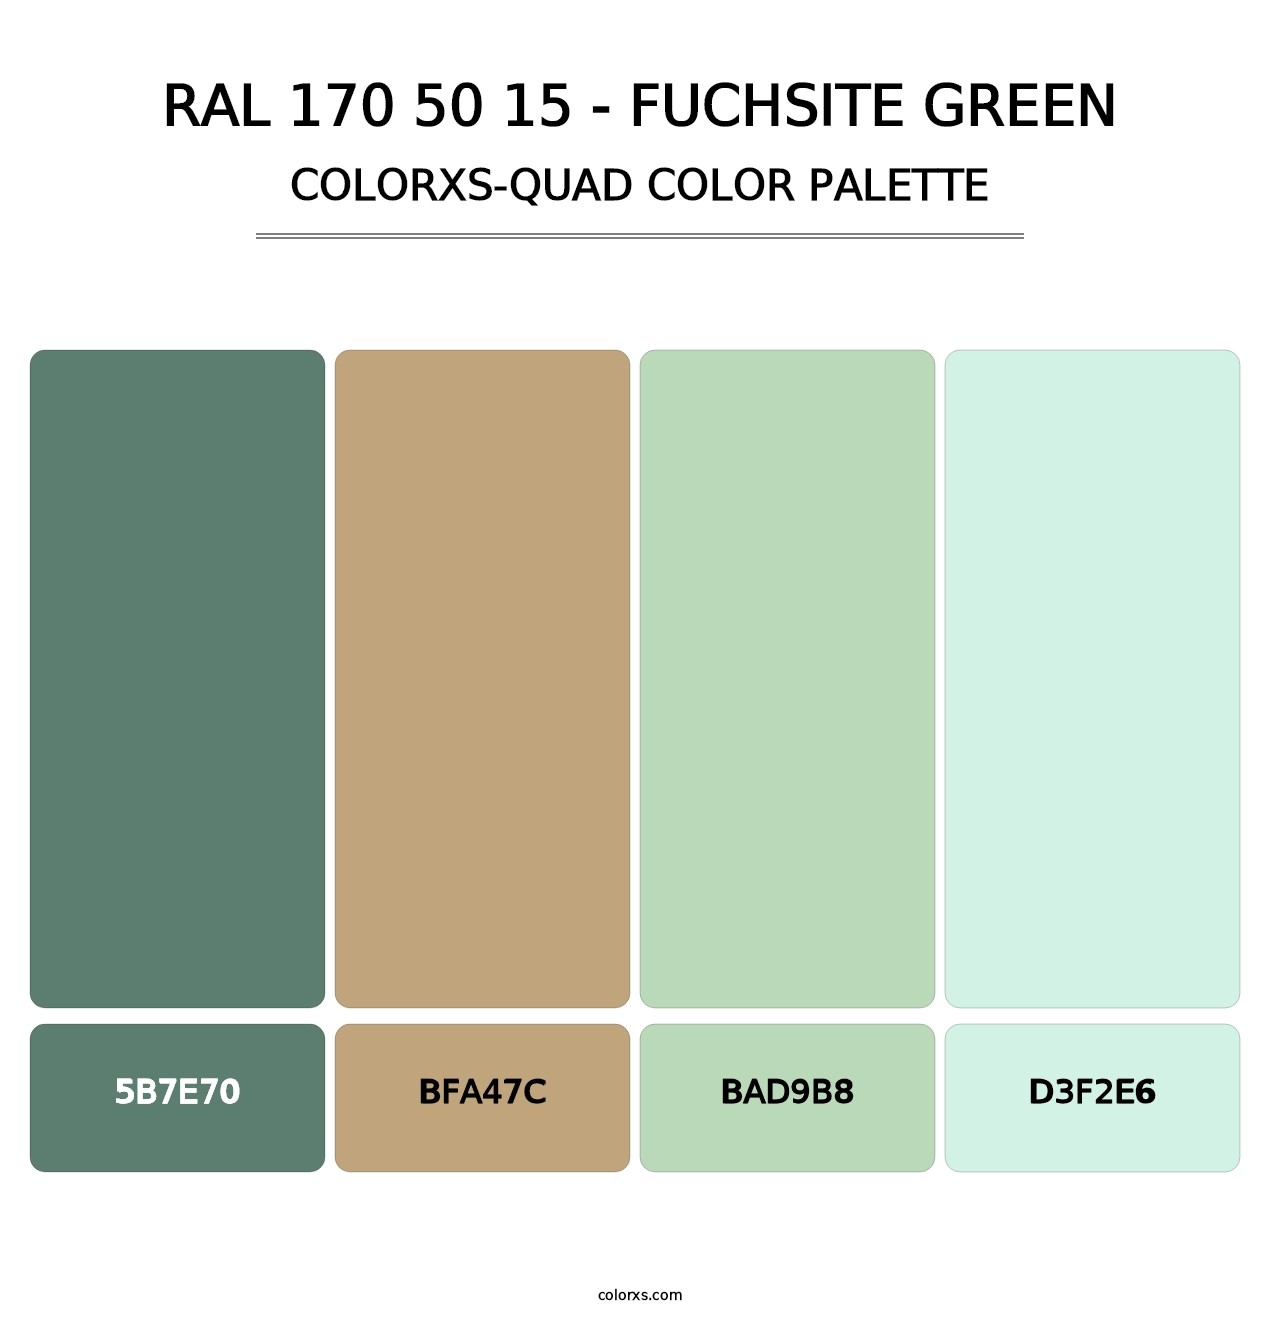 RAL 170 50 15 - Fuchsite Green - Colorxs Quad Palette